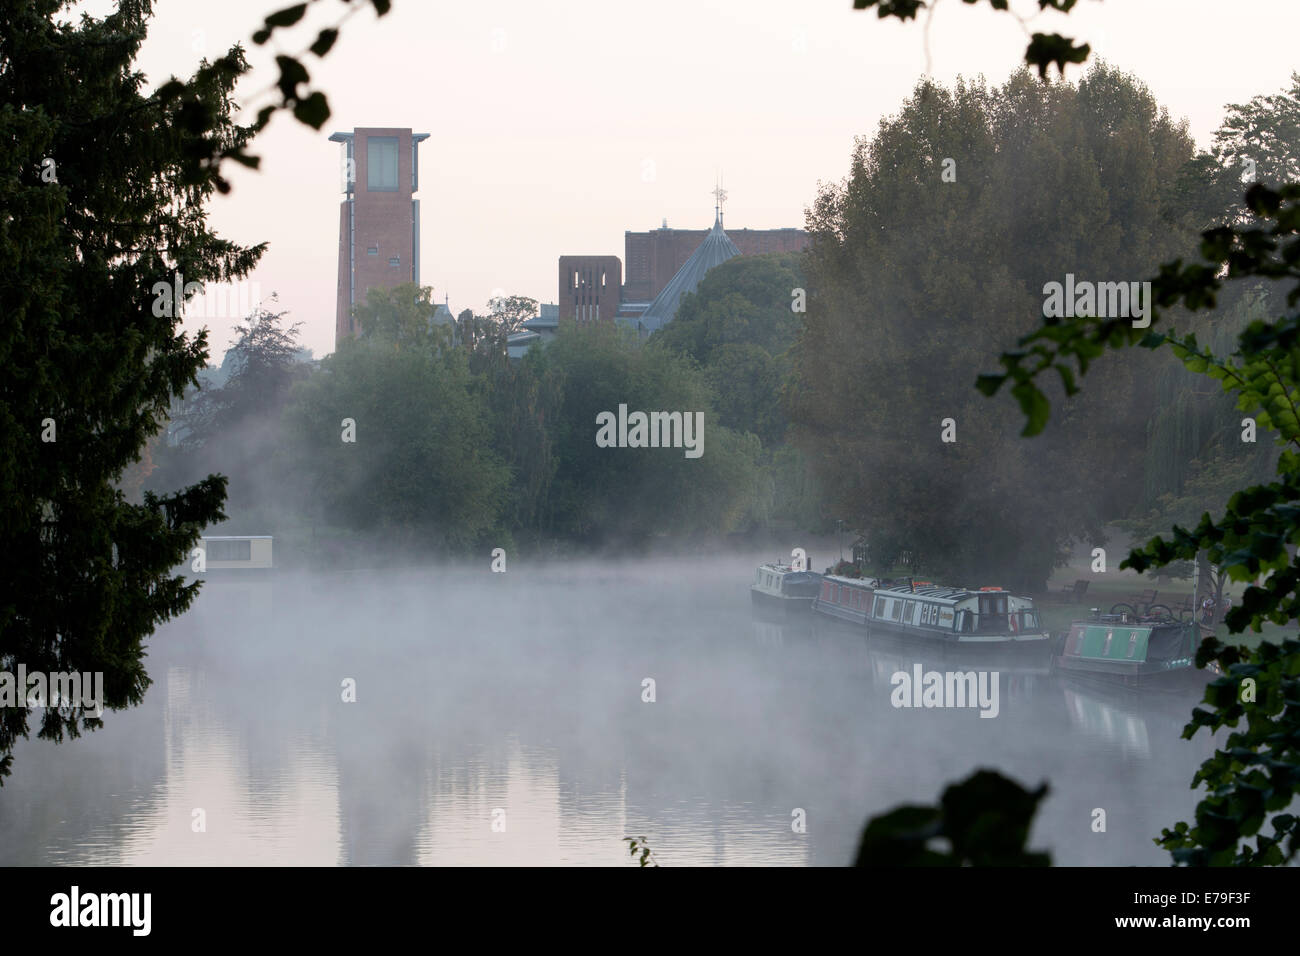 RSC theatre and River Avon, misty at dawn, Stratford-upon-Avon, UK Stock Photo